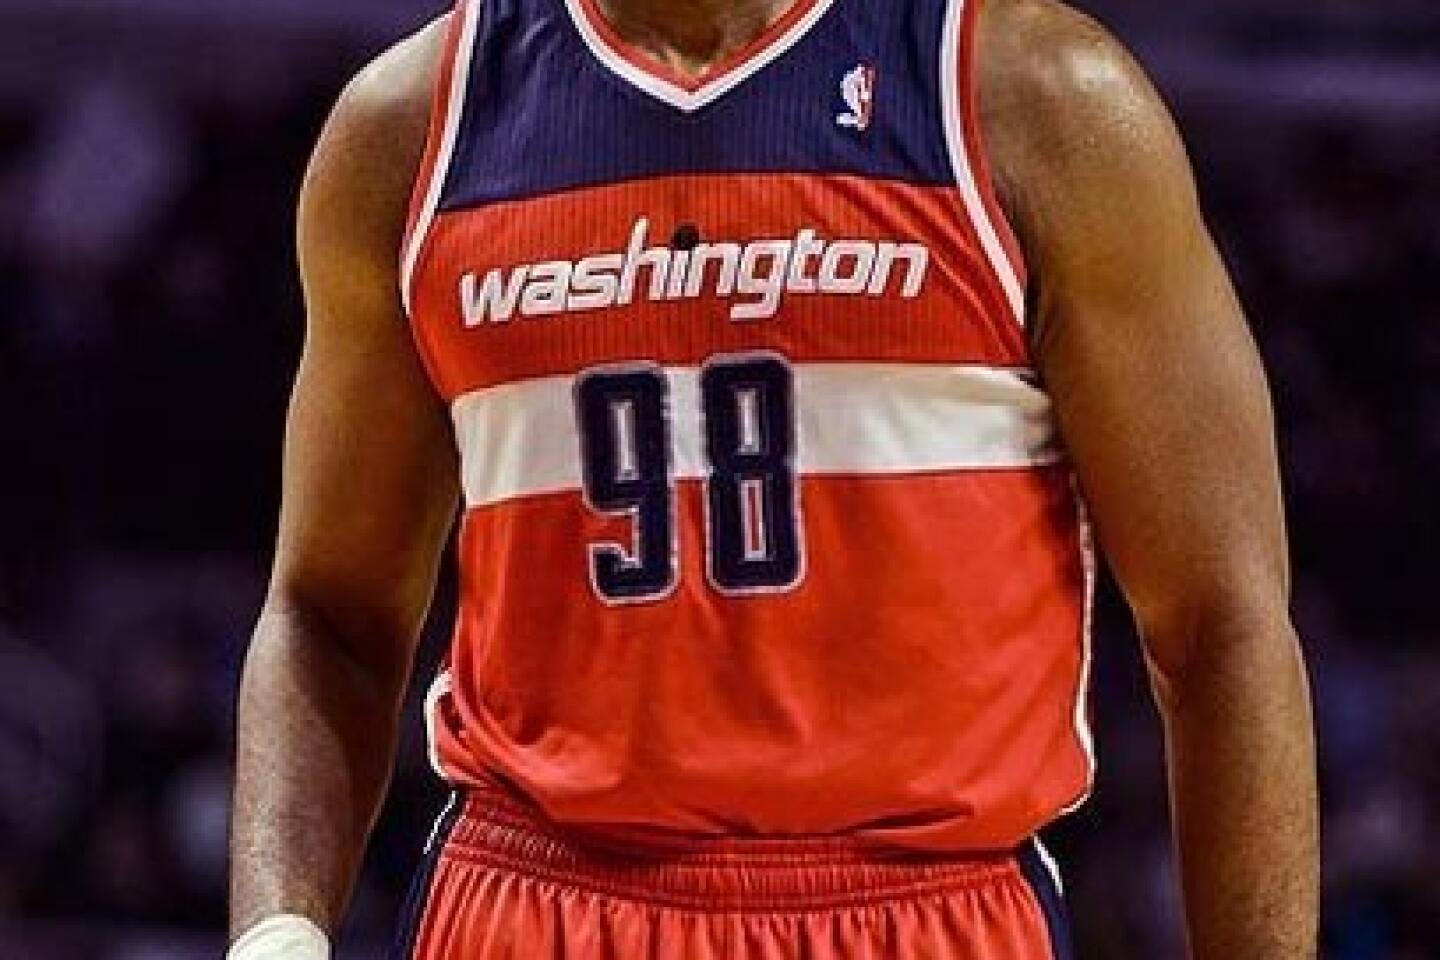 Washington Wizards home game basketball jersey worn by Jason